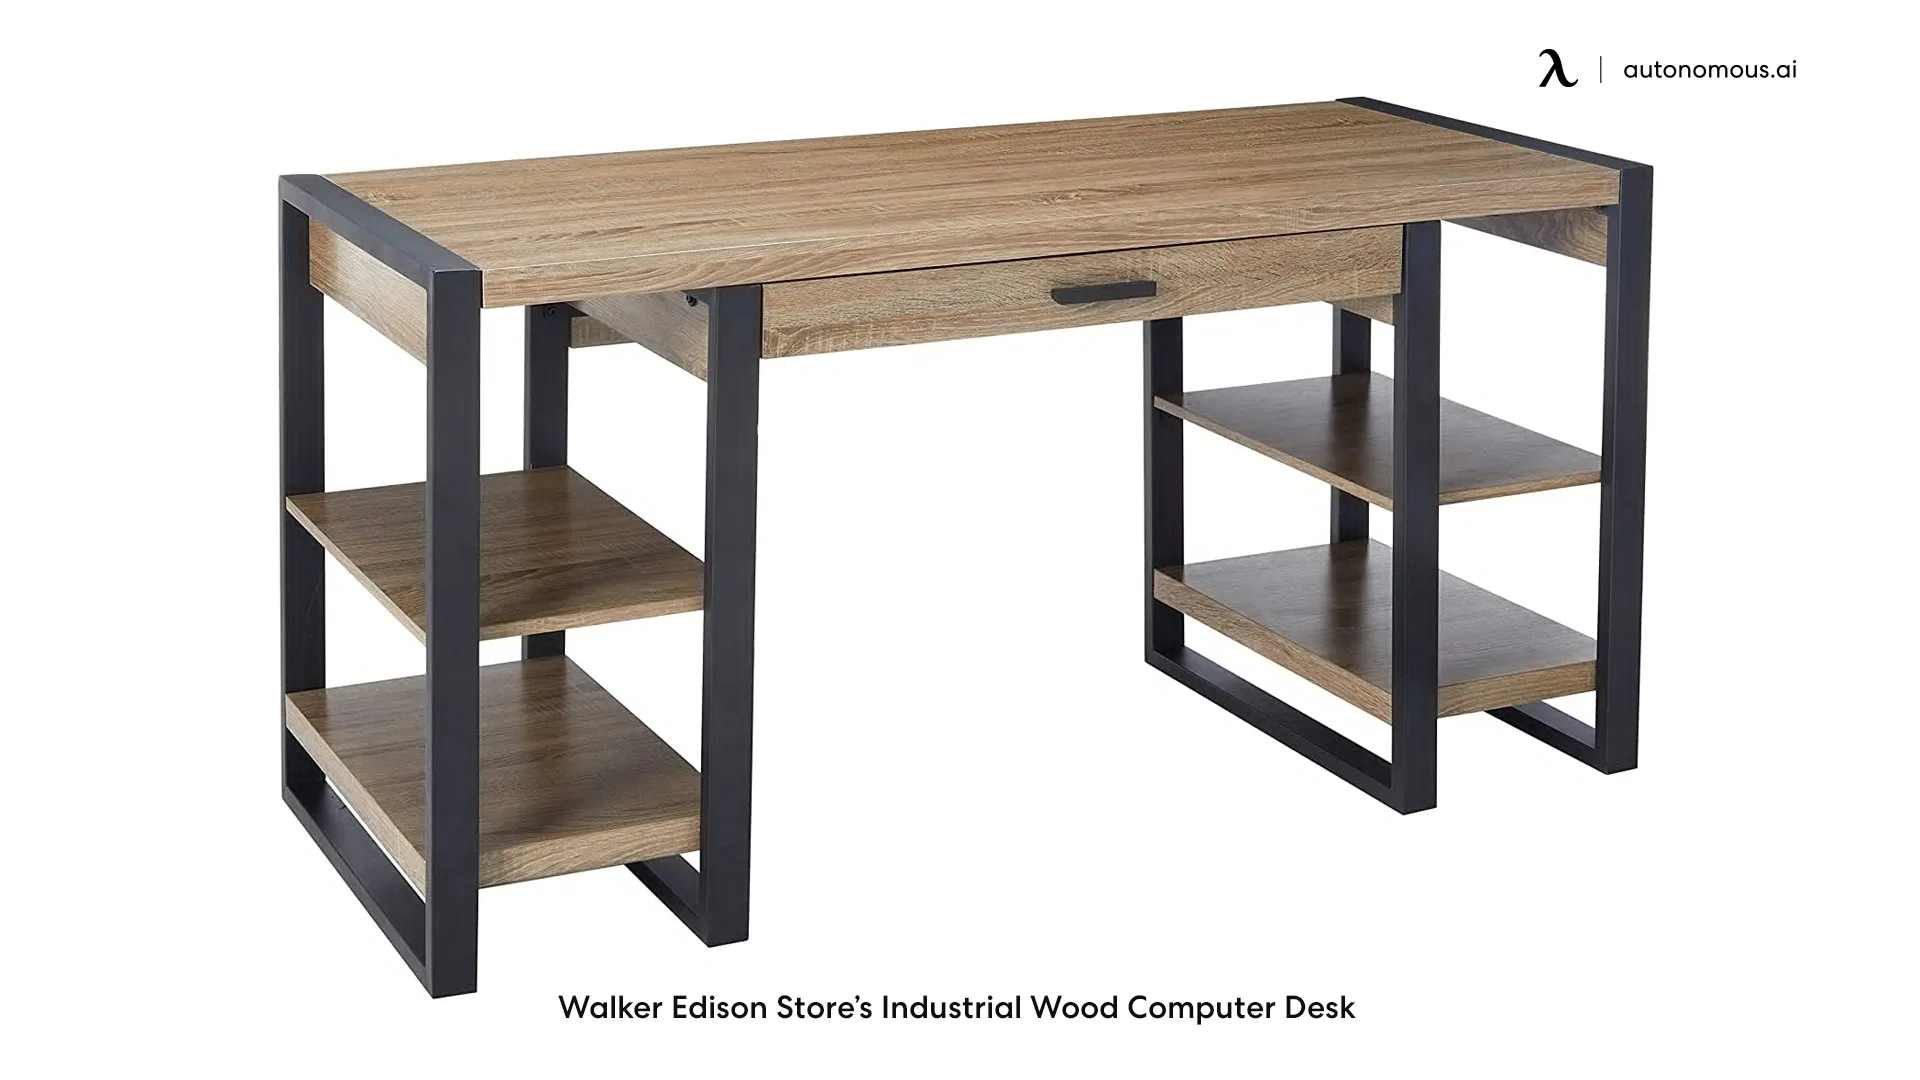 Walker Edison Store’s Industrial Wood Computer Desk